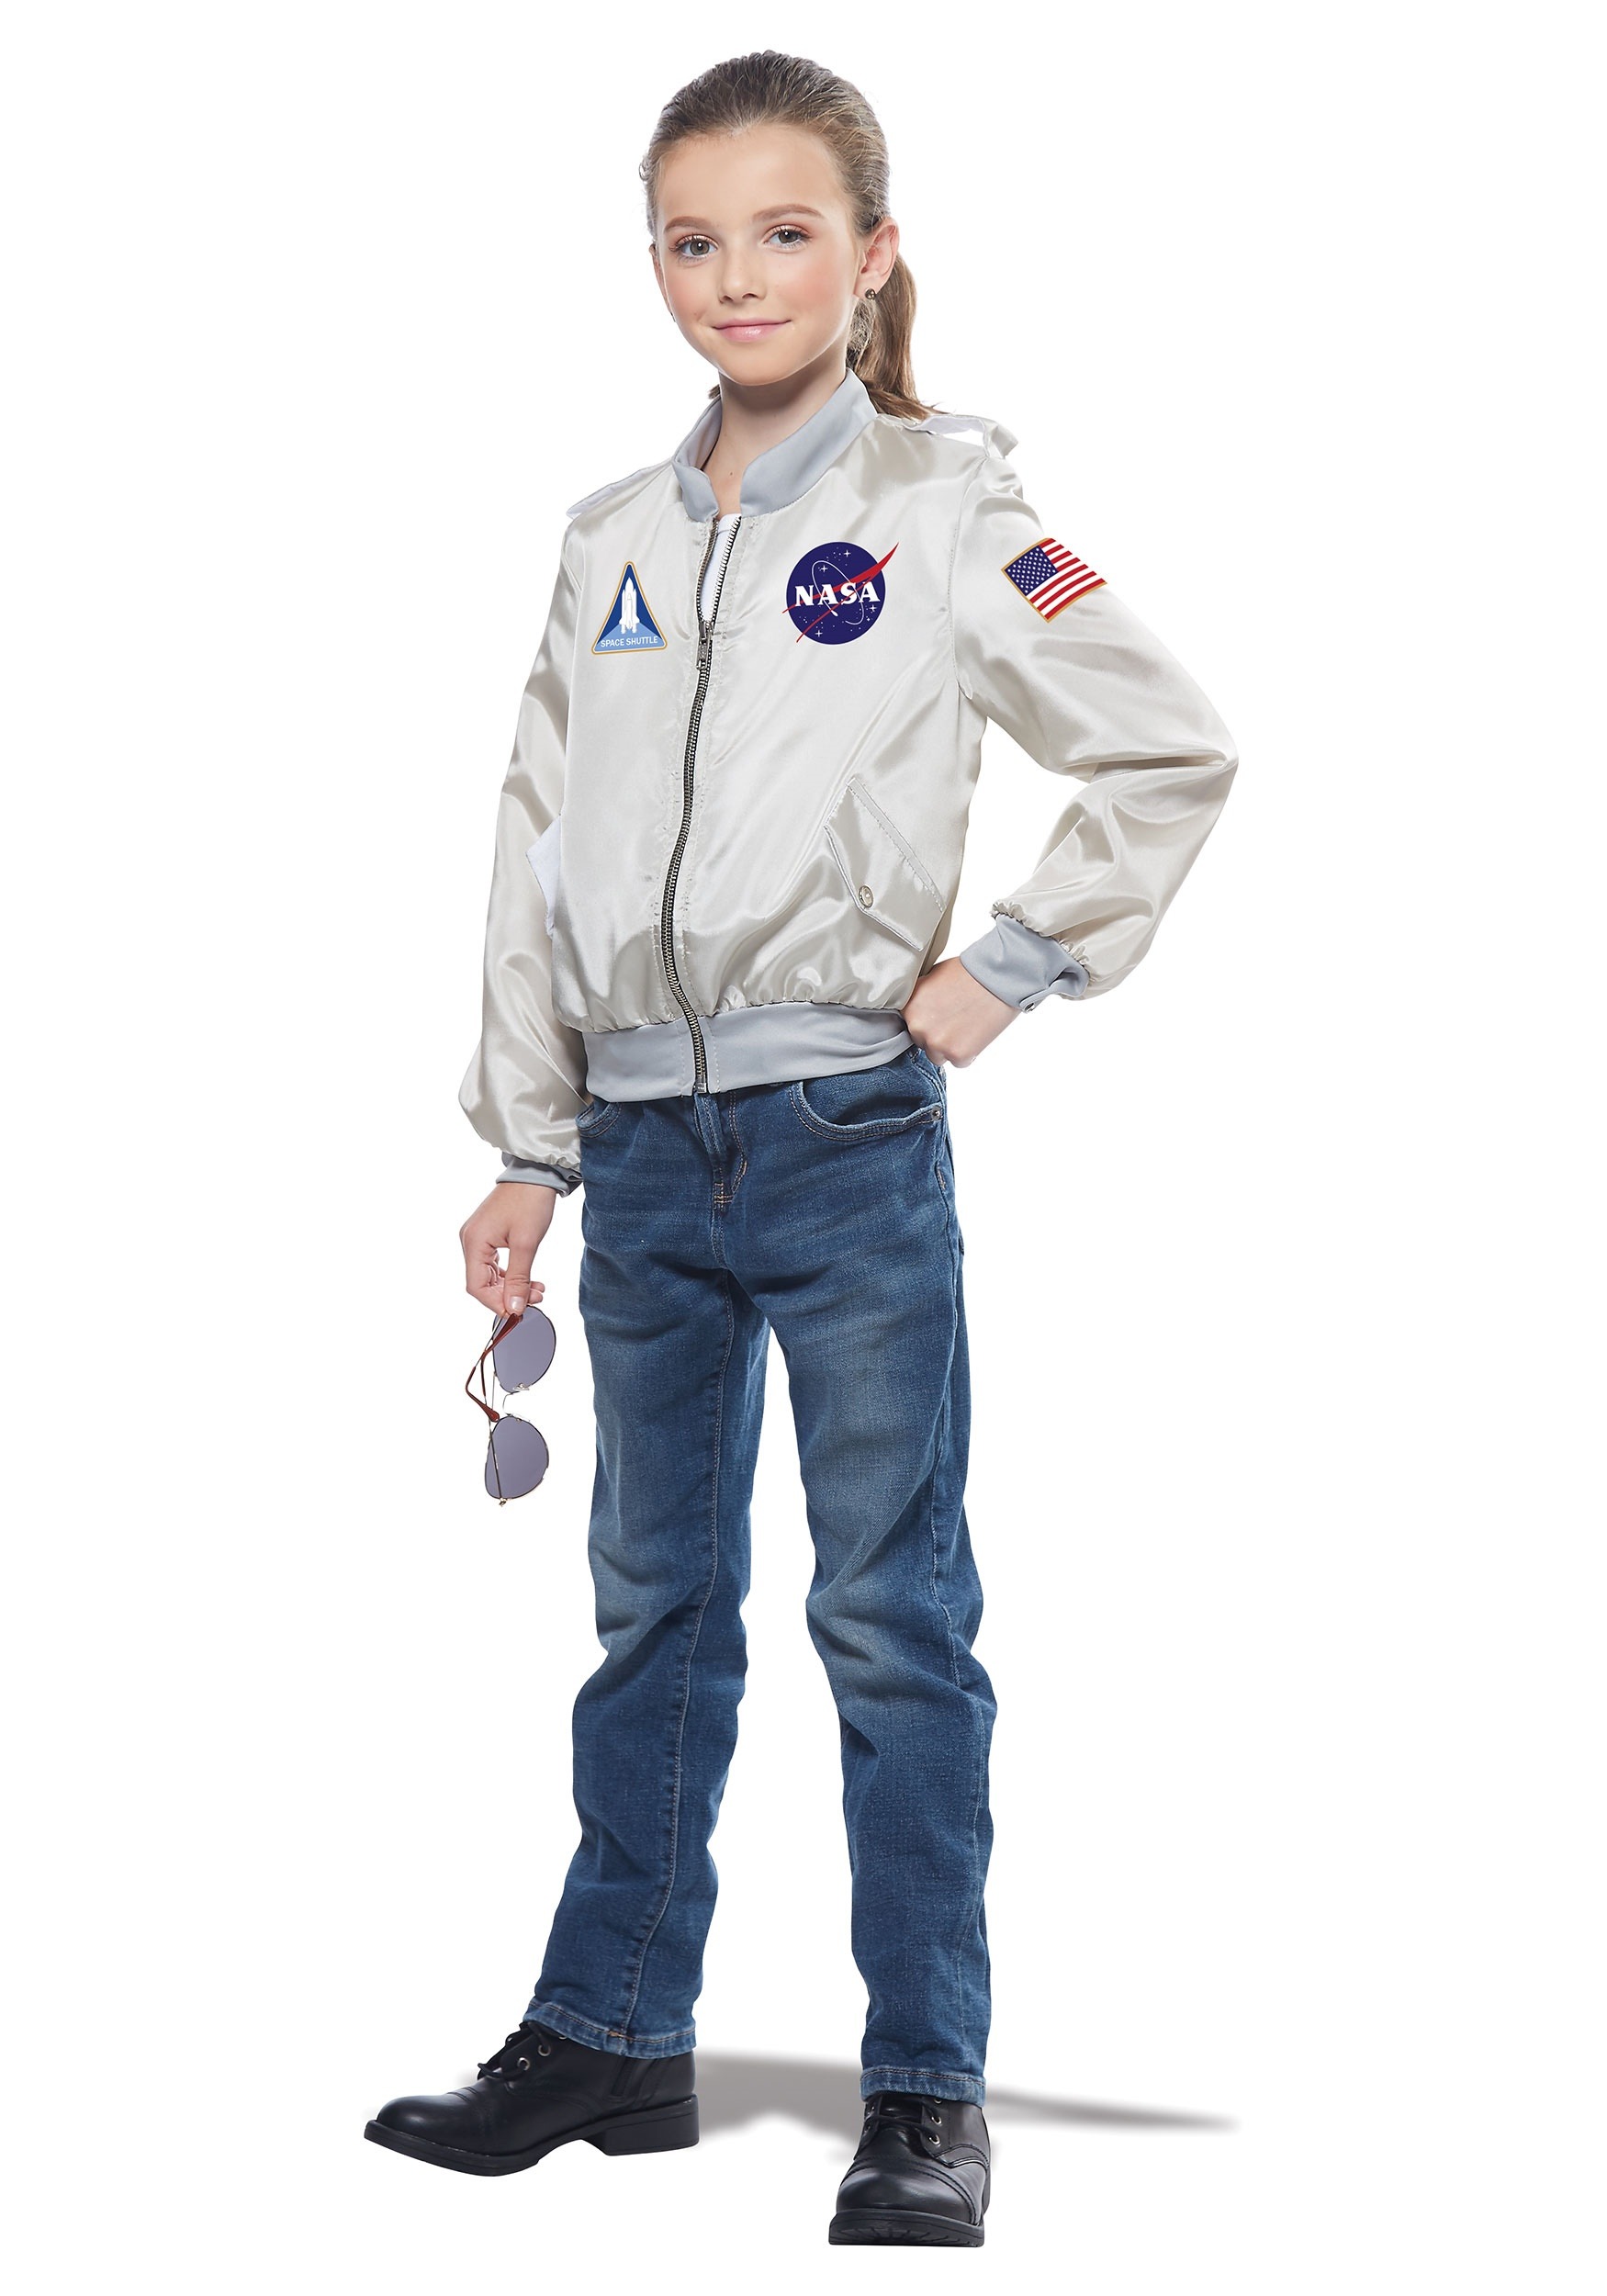 NASA Flight Jacket Costume For Children